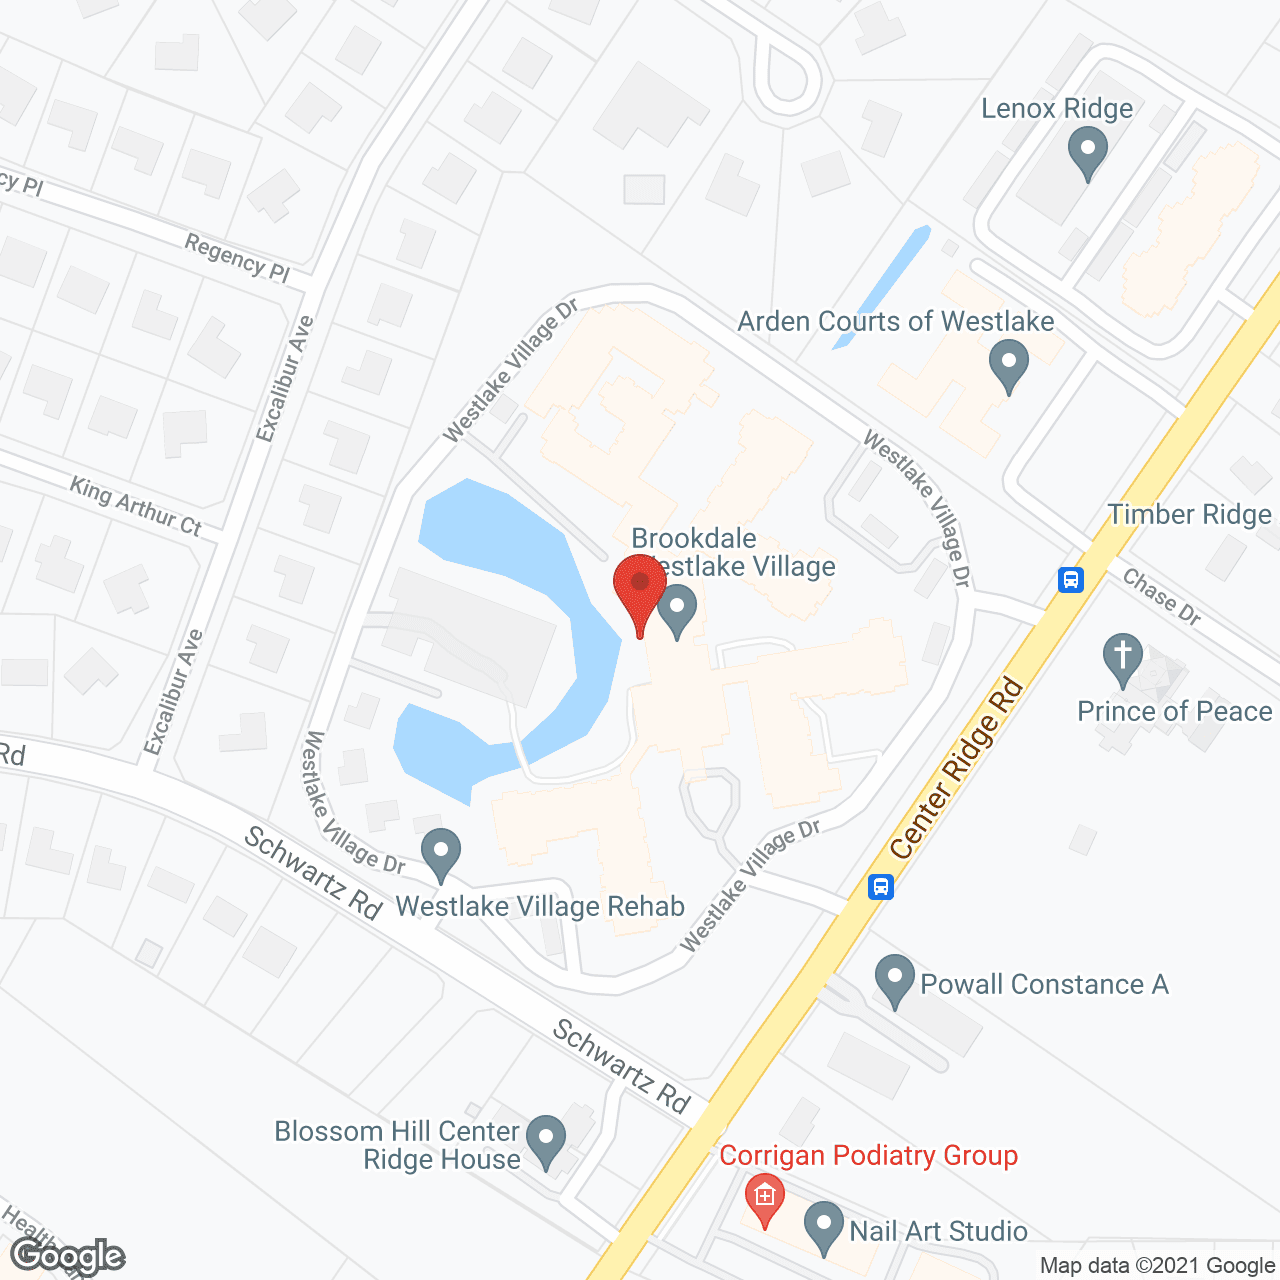 Brookdale Westlake Village (Offering HealthPlus) in google map